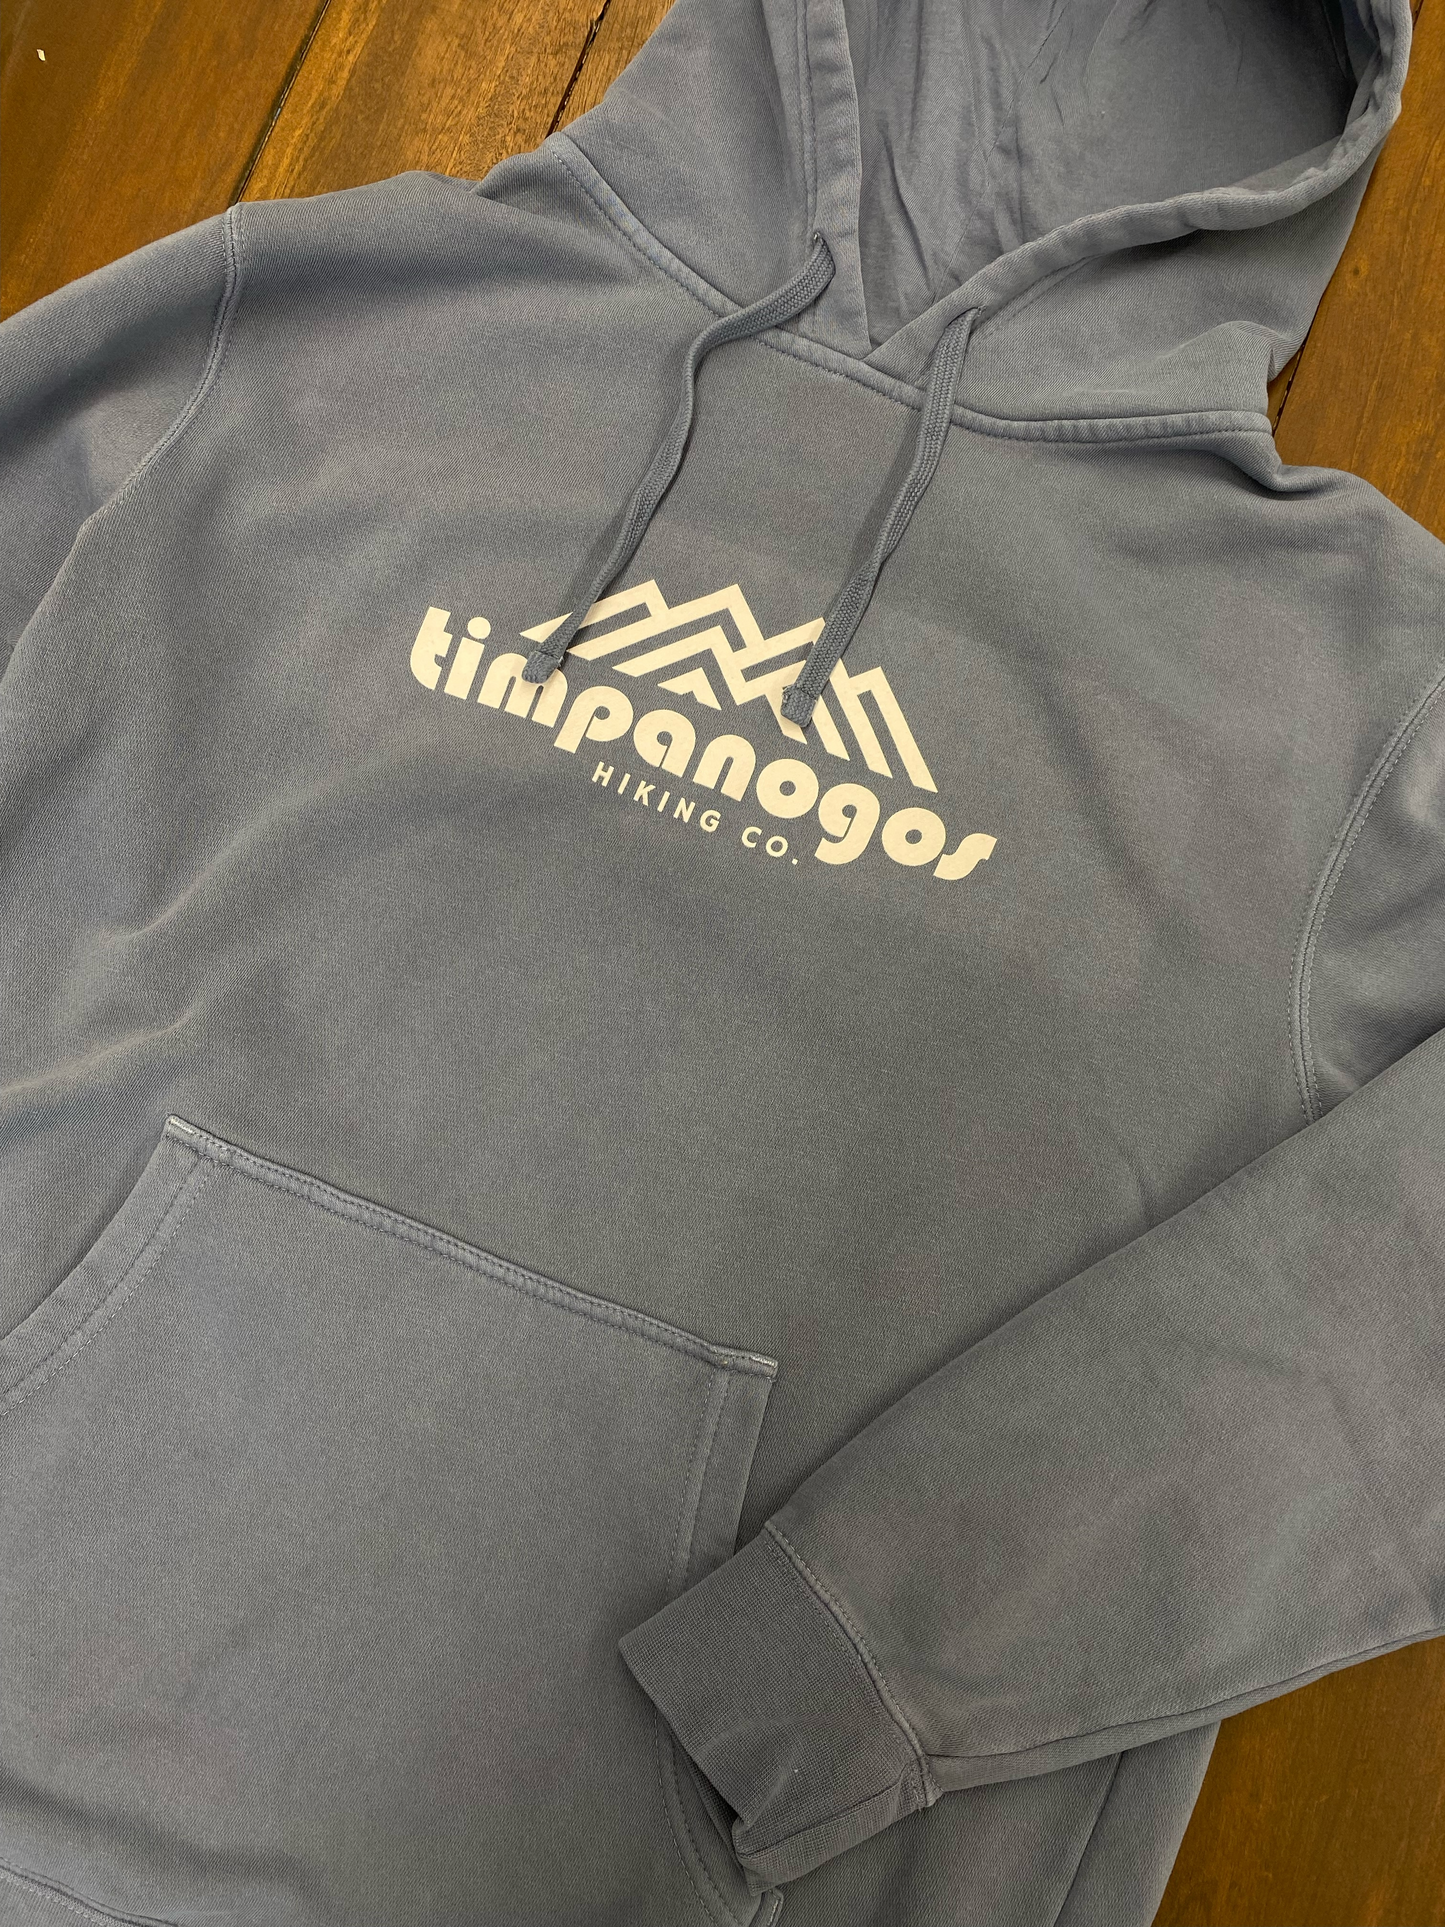 Timpanogos Hiking Co. - Vintage Mountain Blend Hoodie